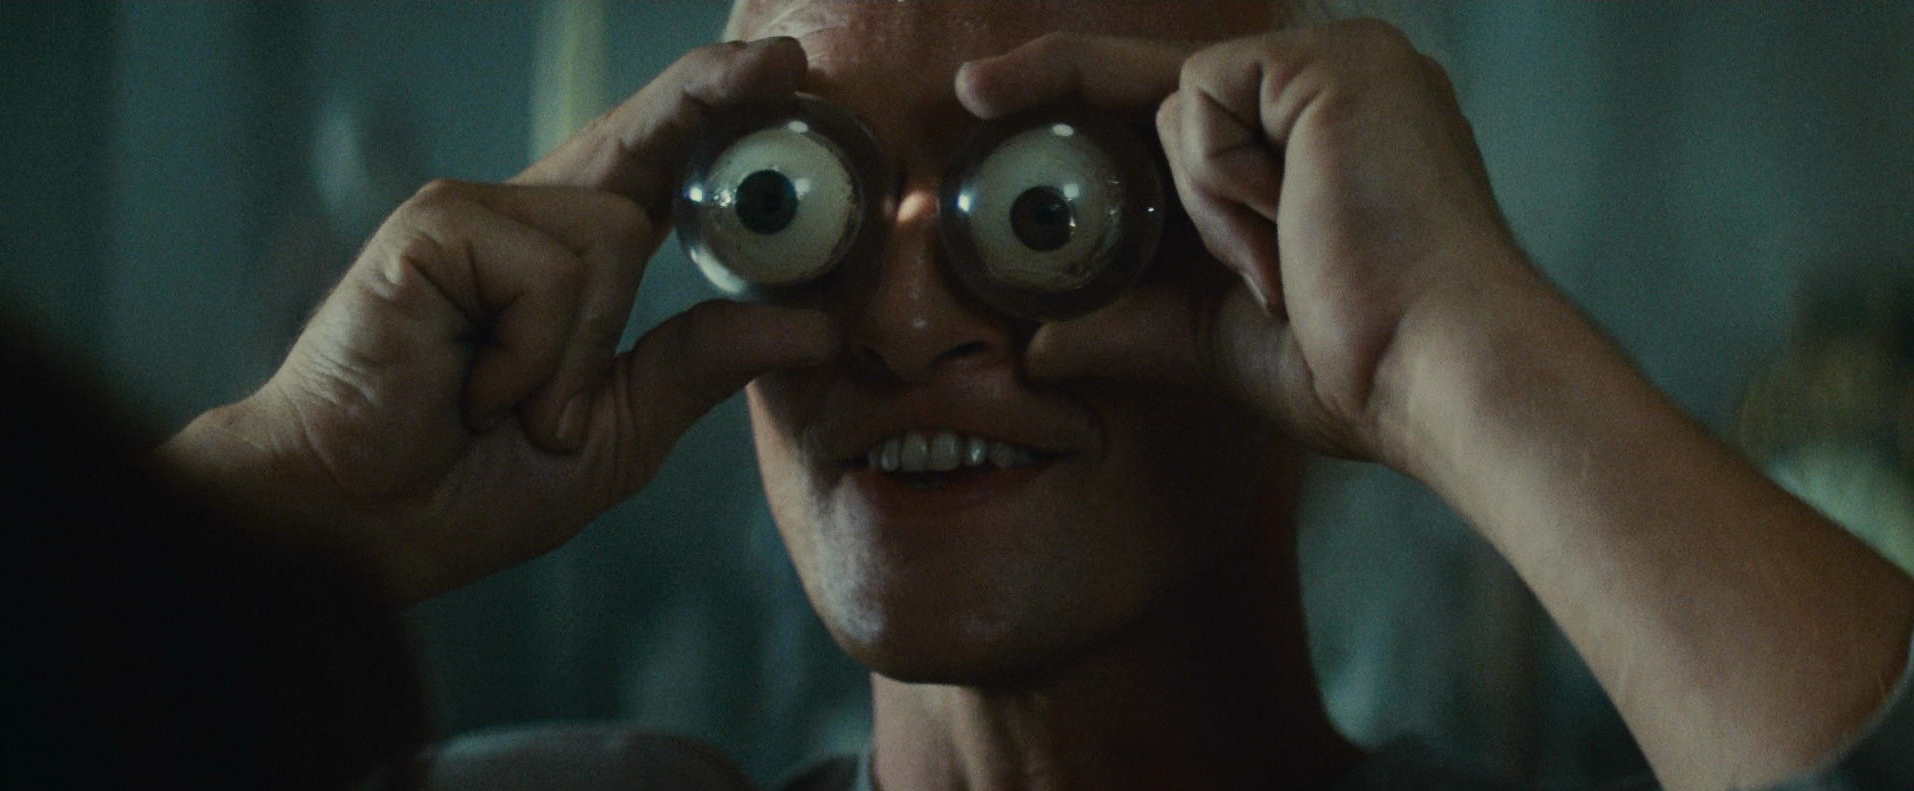 Blade Runner - Ridley Scott - Rutger Hauer - Roy Batty - eyes - glasses - replicant